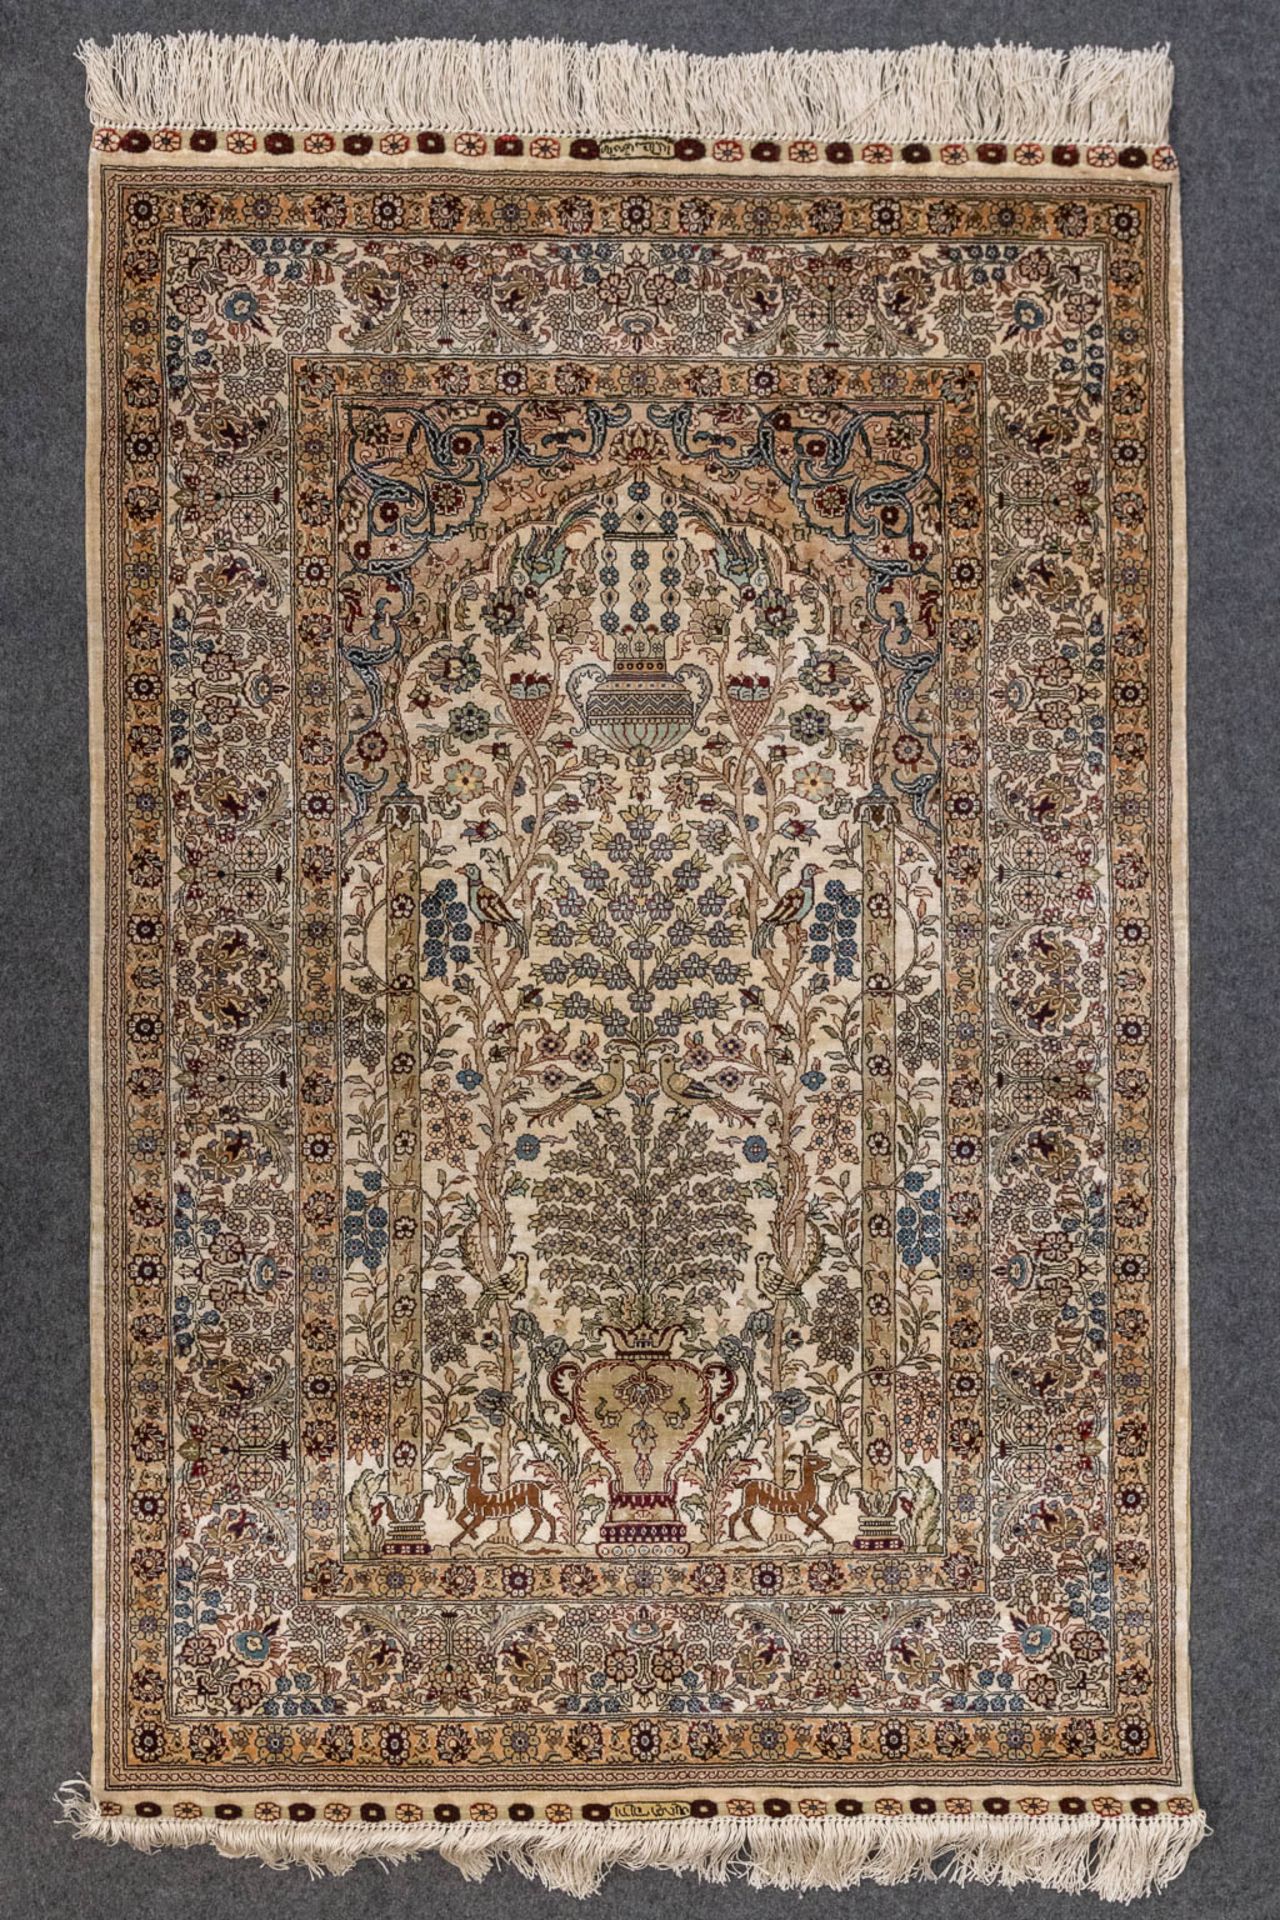 A hand-made carpet made of silk, Hereke, (122 x 77 cm). 